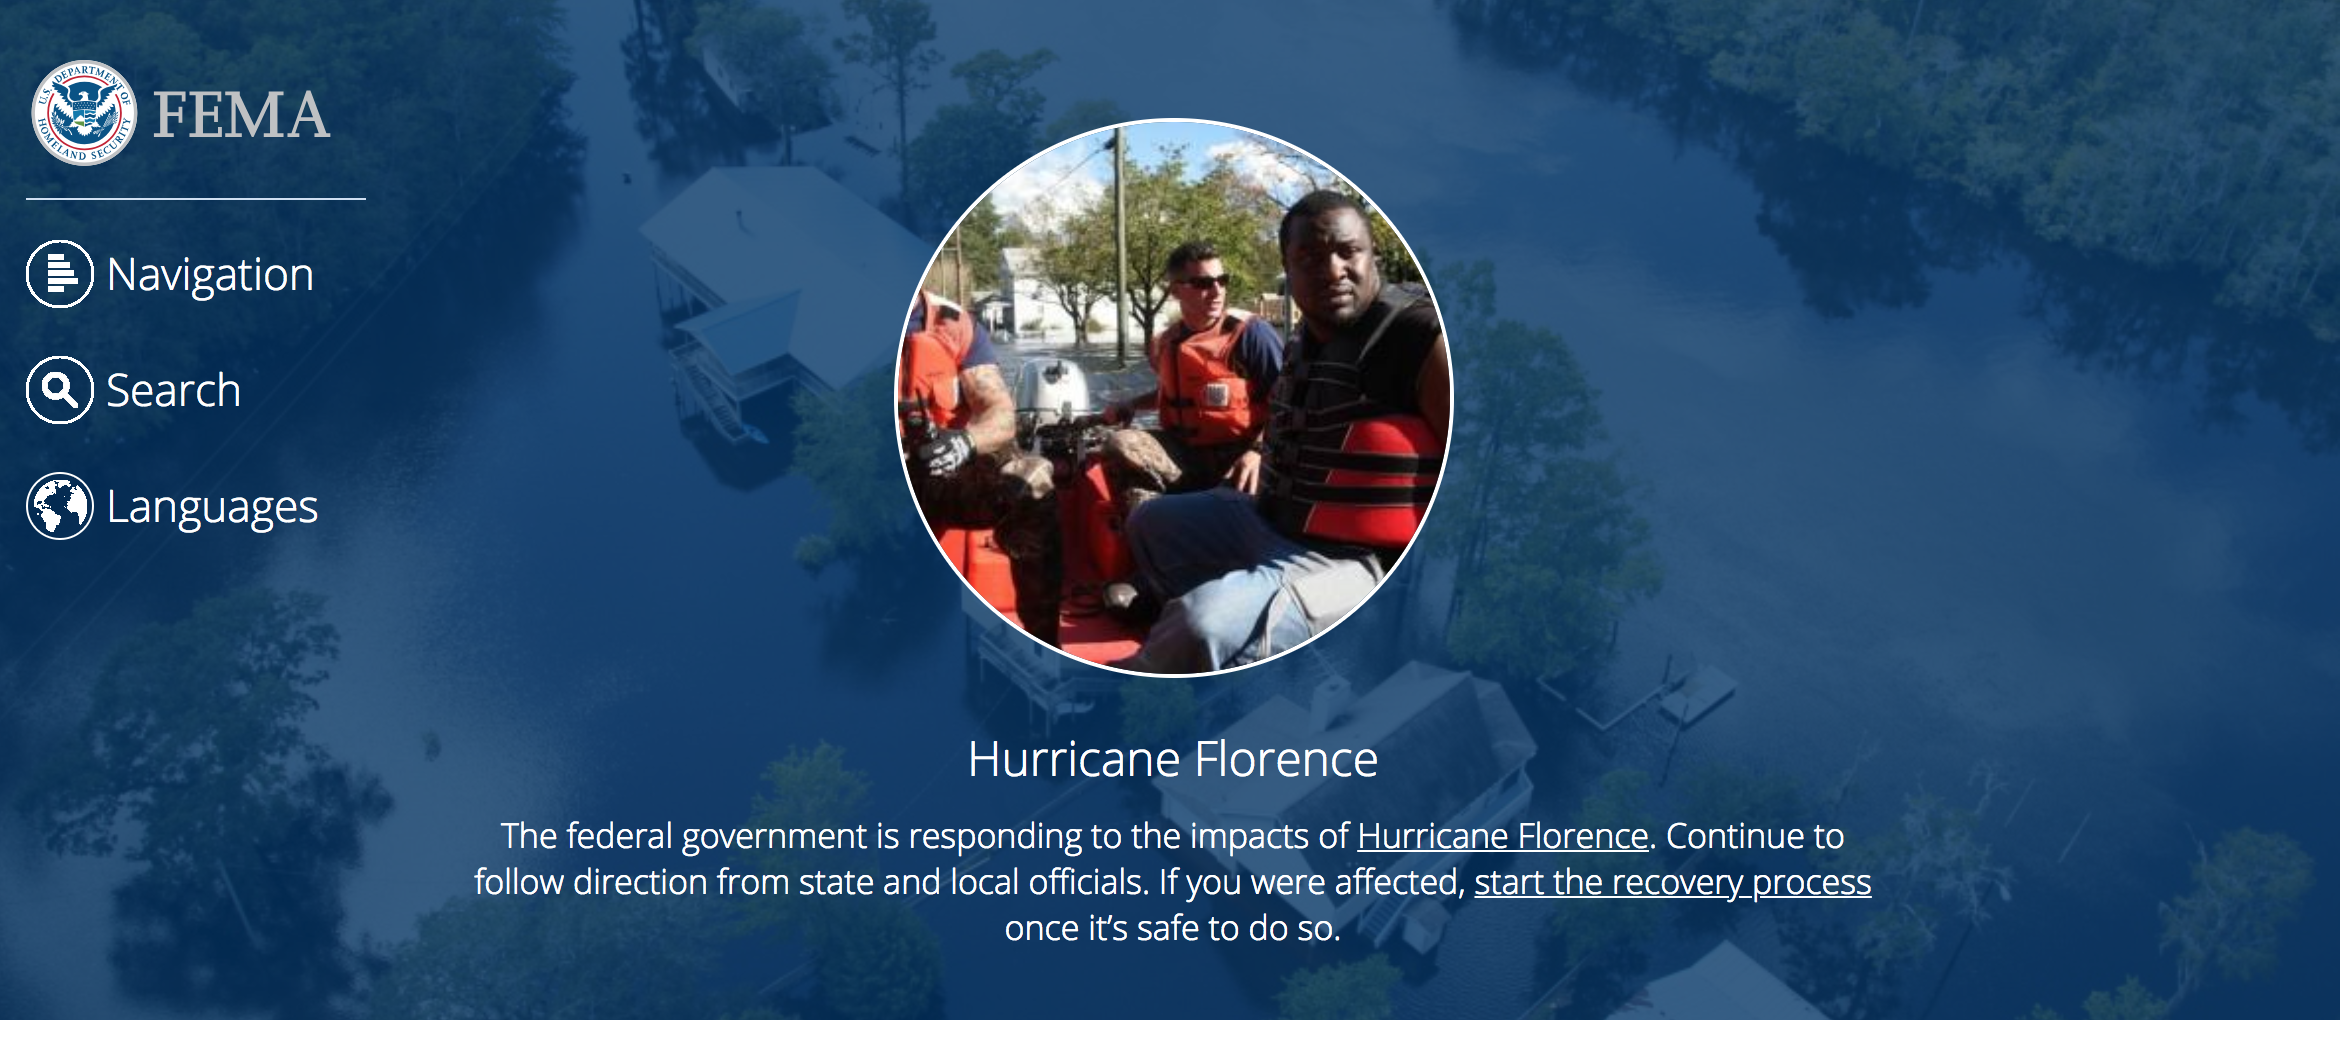 screenshot of the FEMA homepage showing information on Hurricane Florence